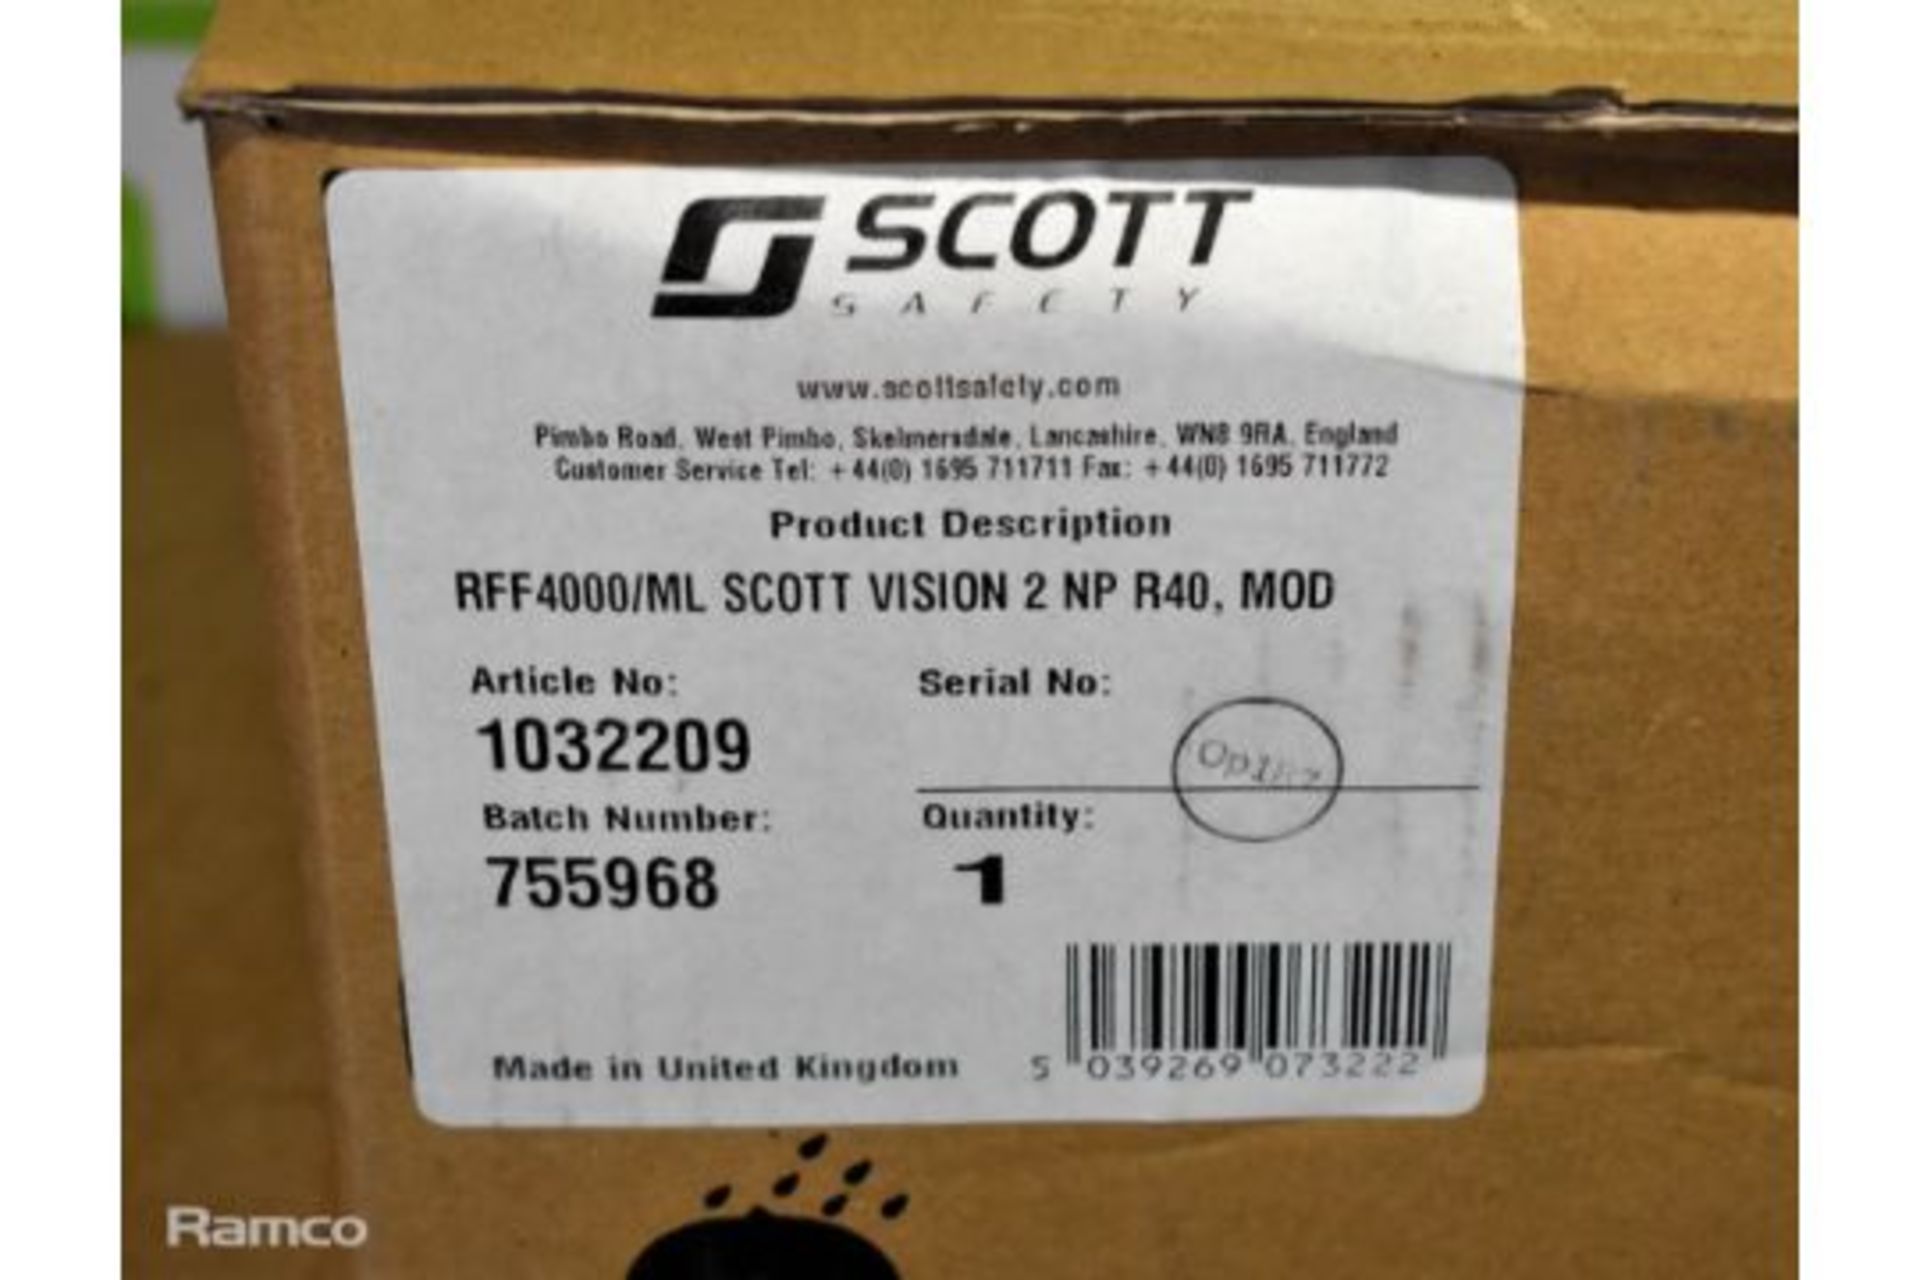 1 x Scott full face respirator mask - size medium. Supplied in original box. - Image 4 of 4